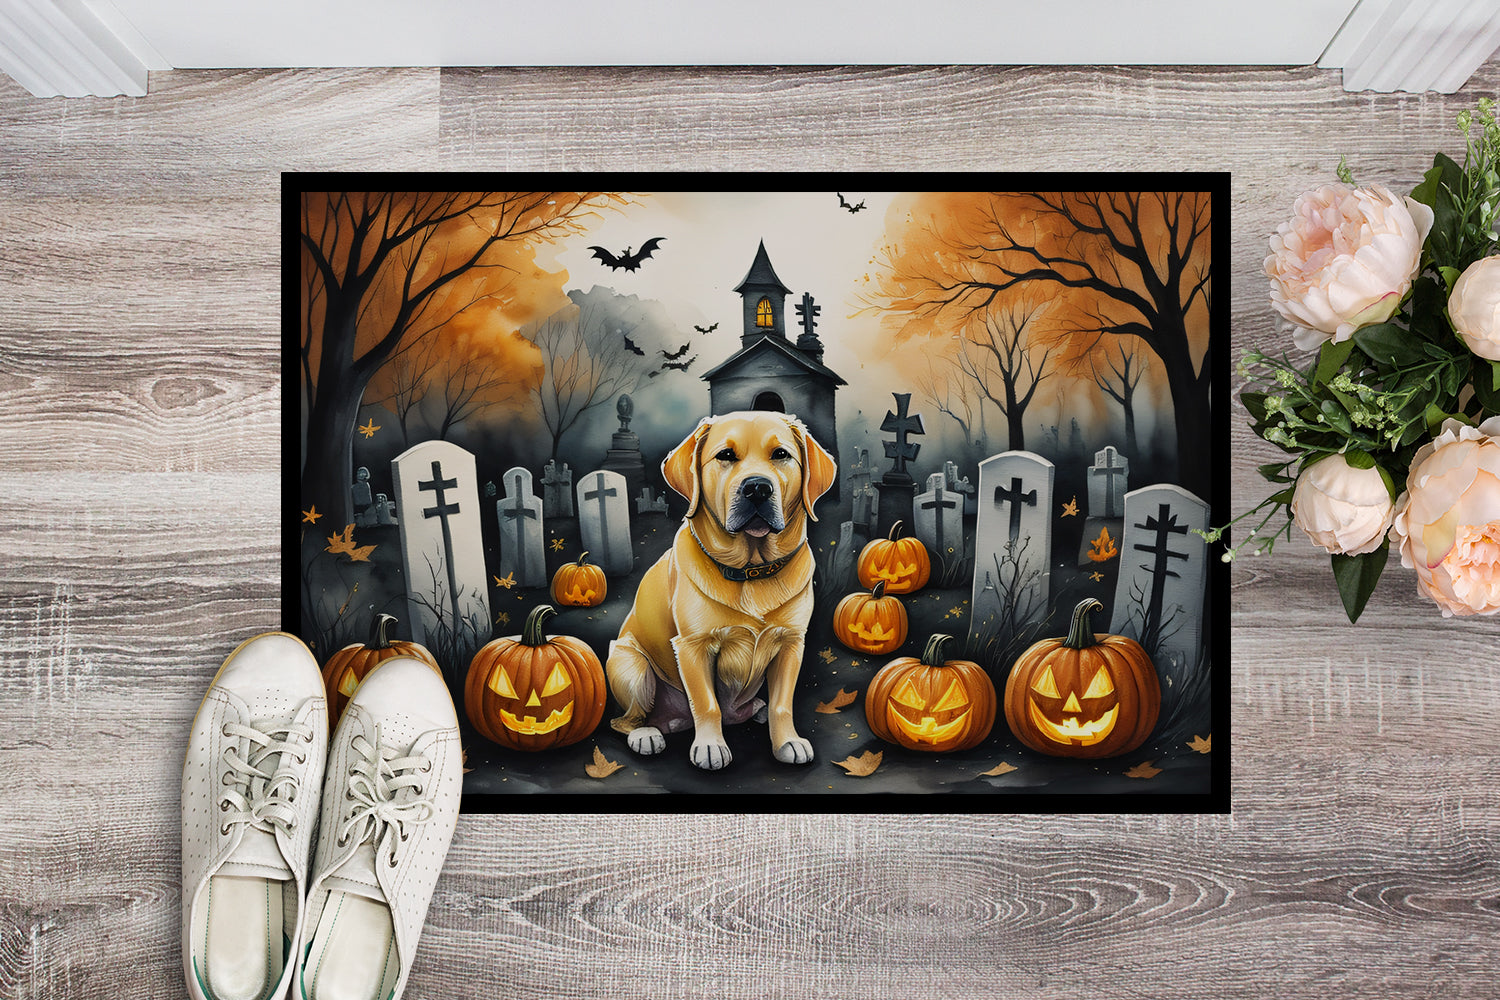 Buy this Yellow Labrador Retriever Spooky Halloween Doormat 18x27